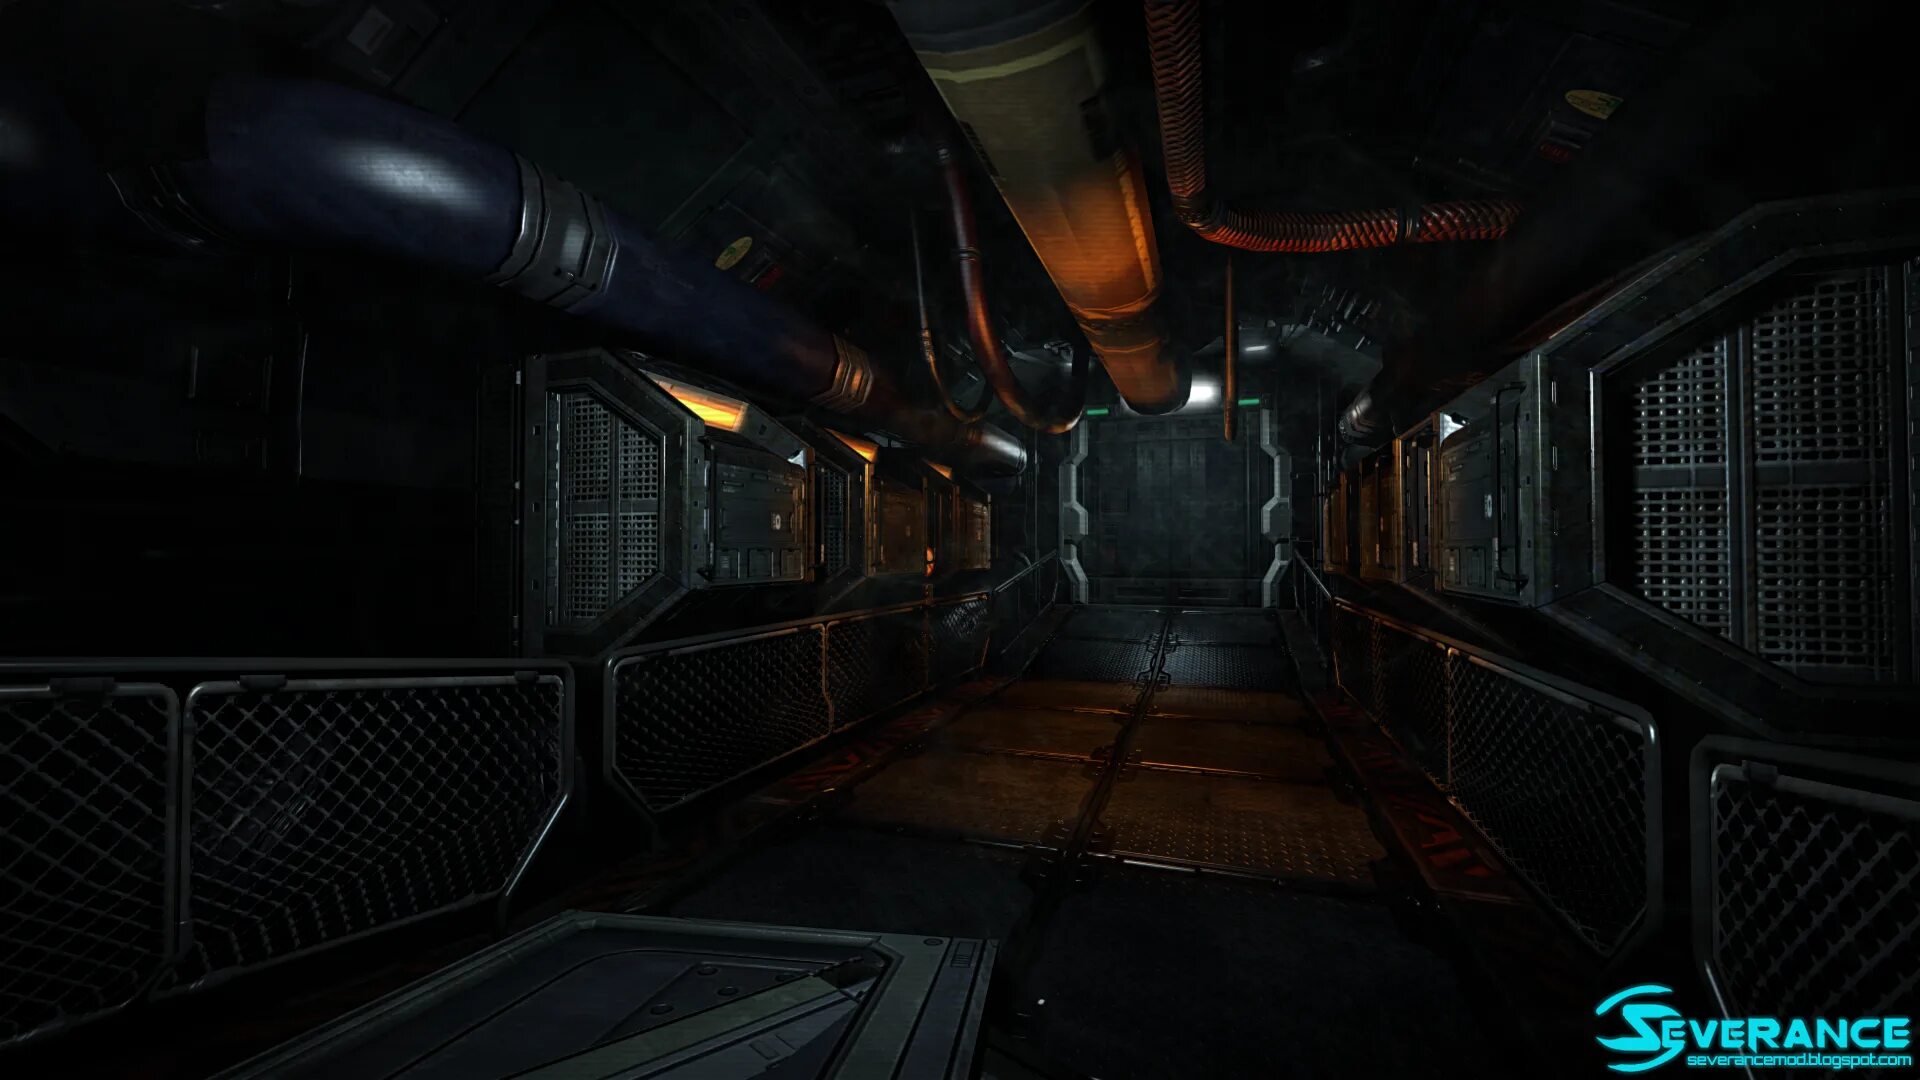 Doom 3 Corridor. Doom 3 коридоры. Doom 3 Remastered на Unreal engine 4. Дум 3 коридоры токамака. 3 corridors